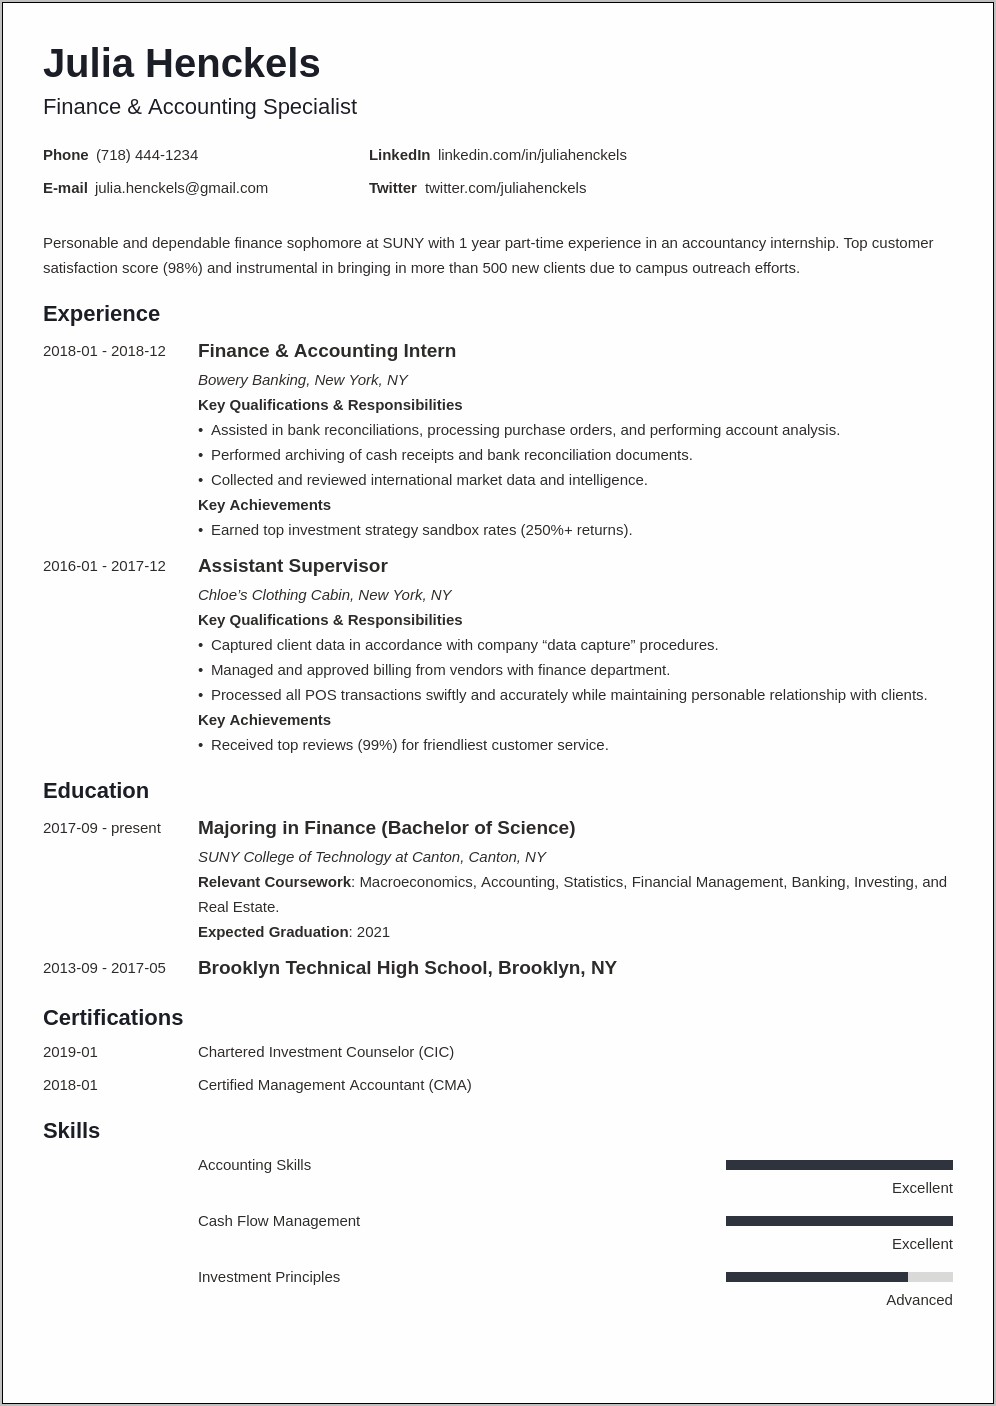 Resume Objective For Finance Graduate